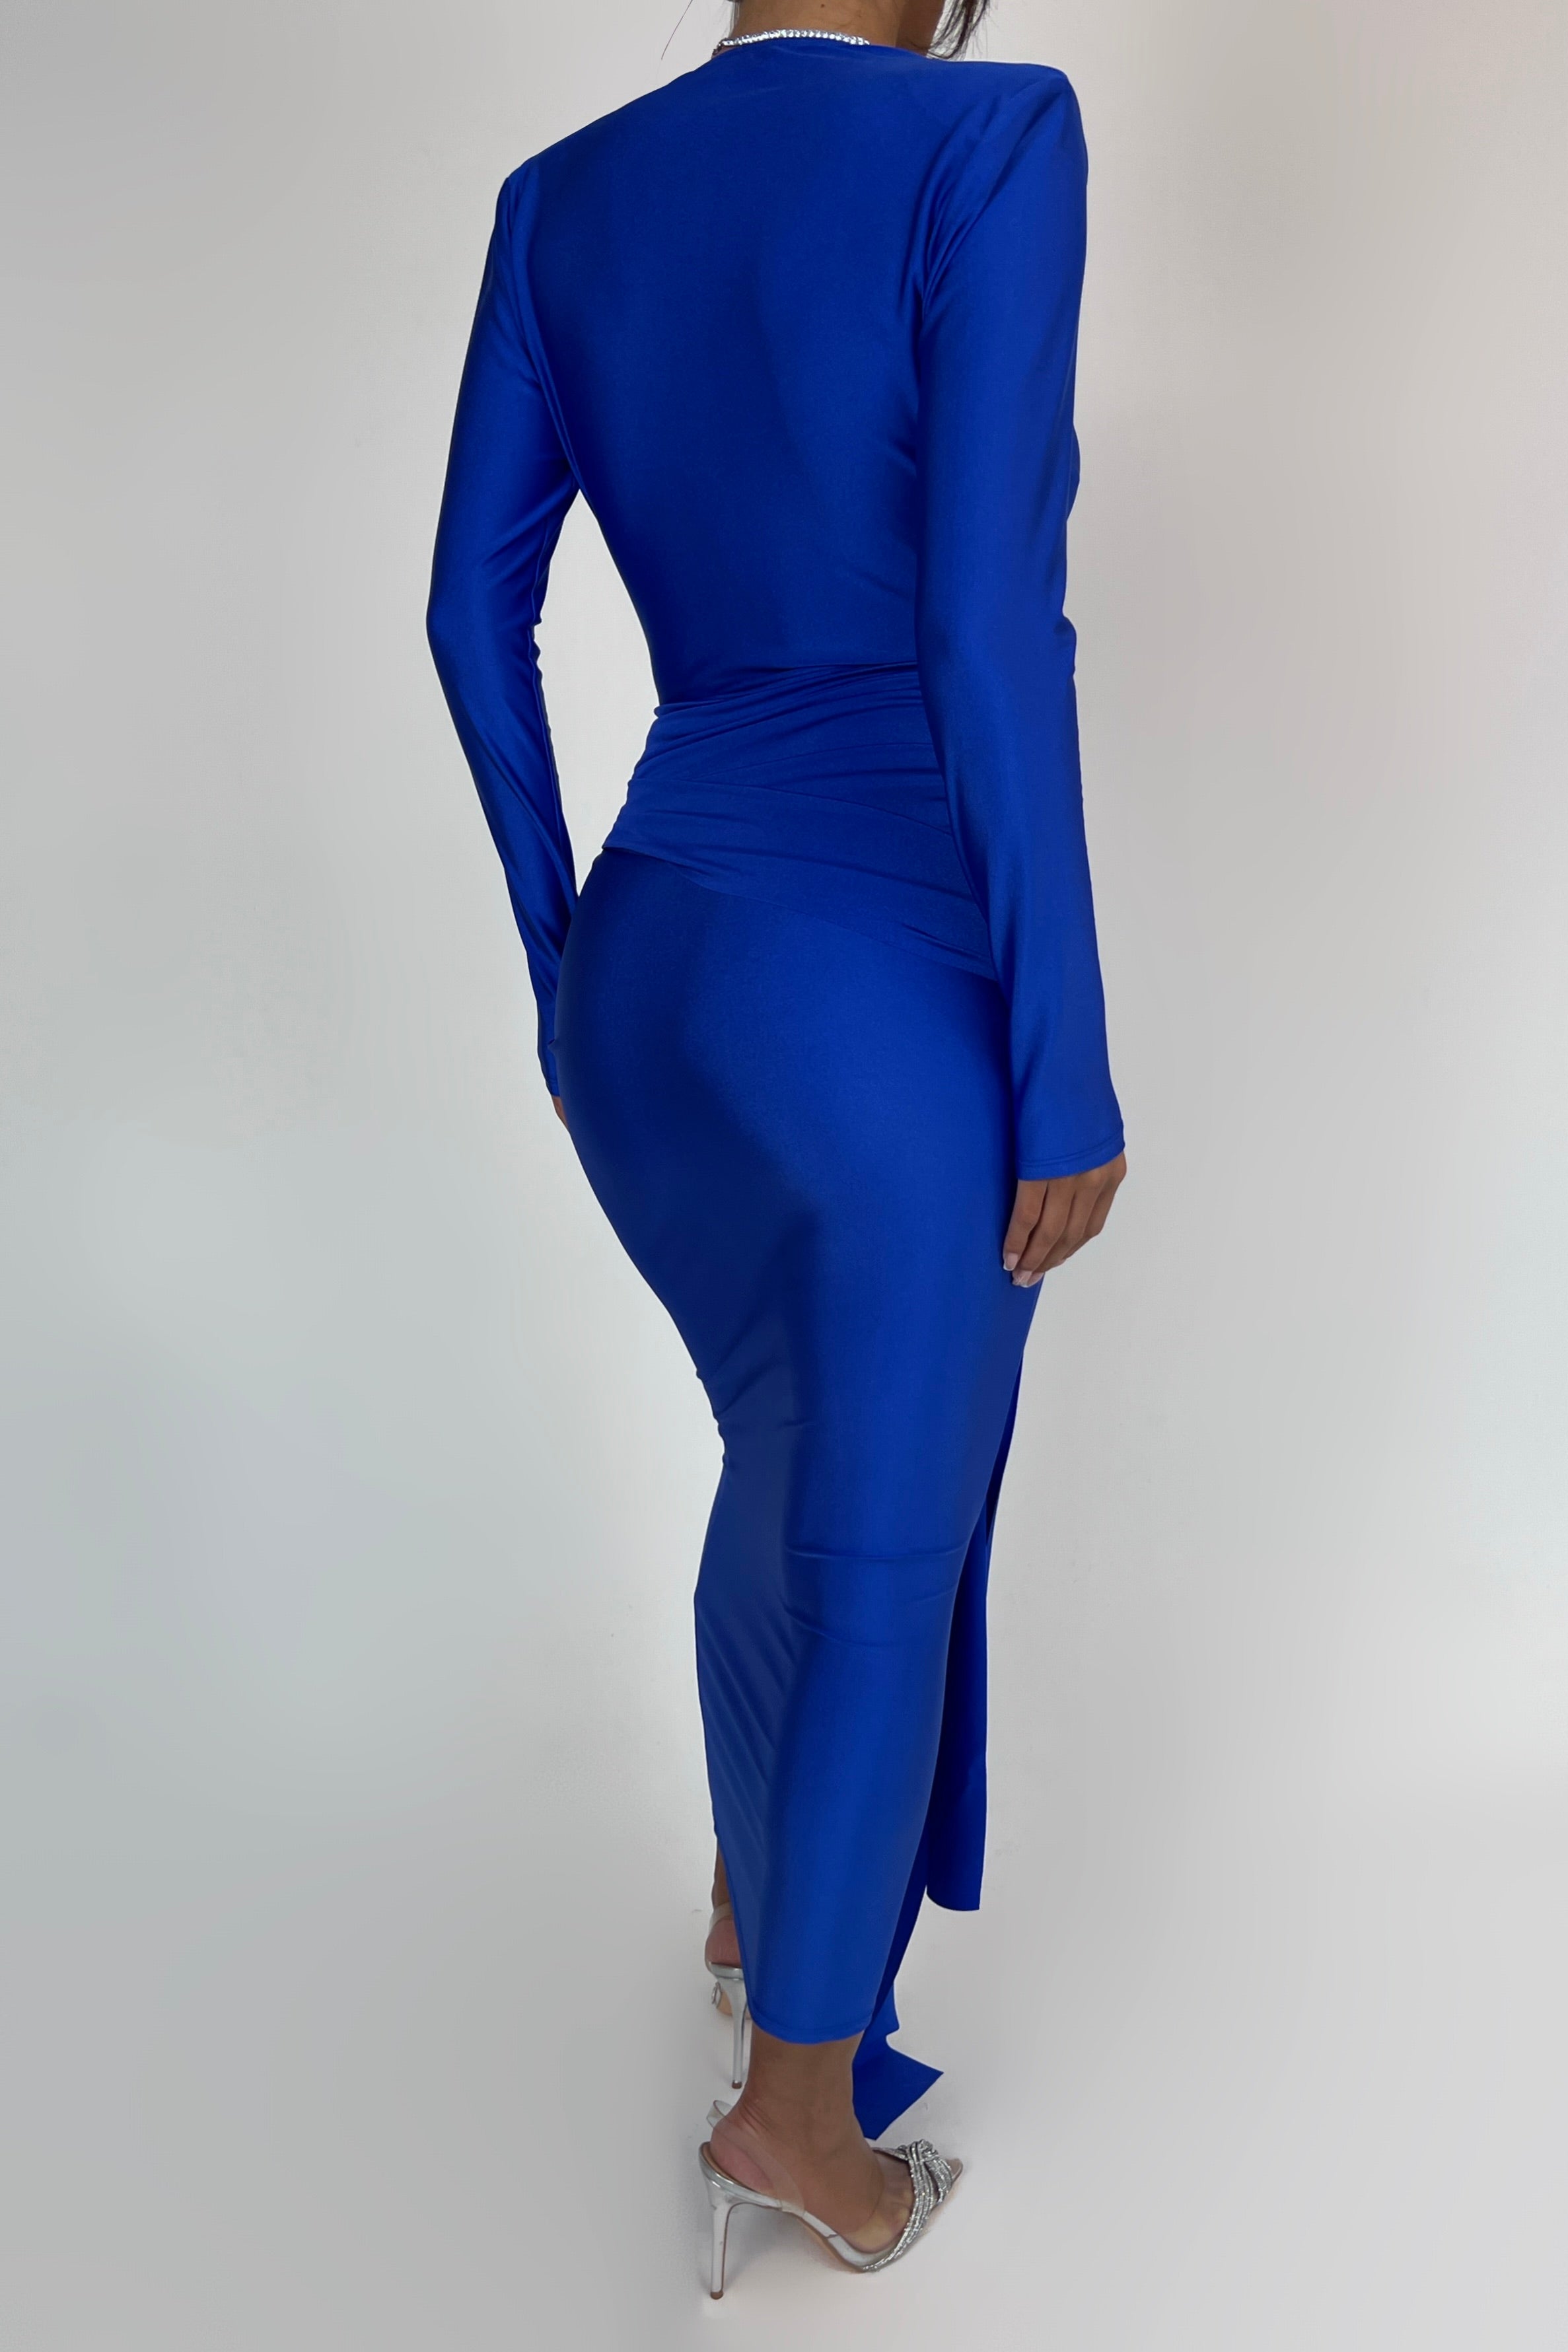 Arabella Royal Blue Dress